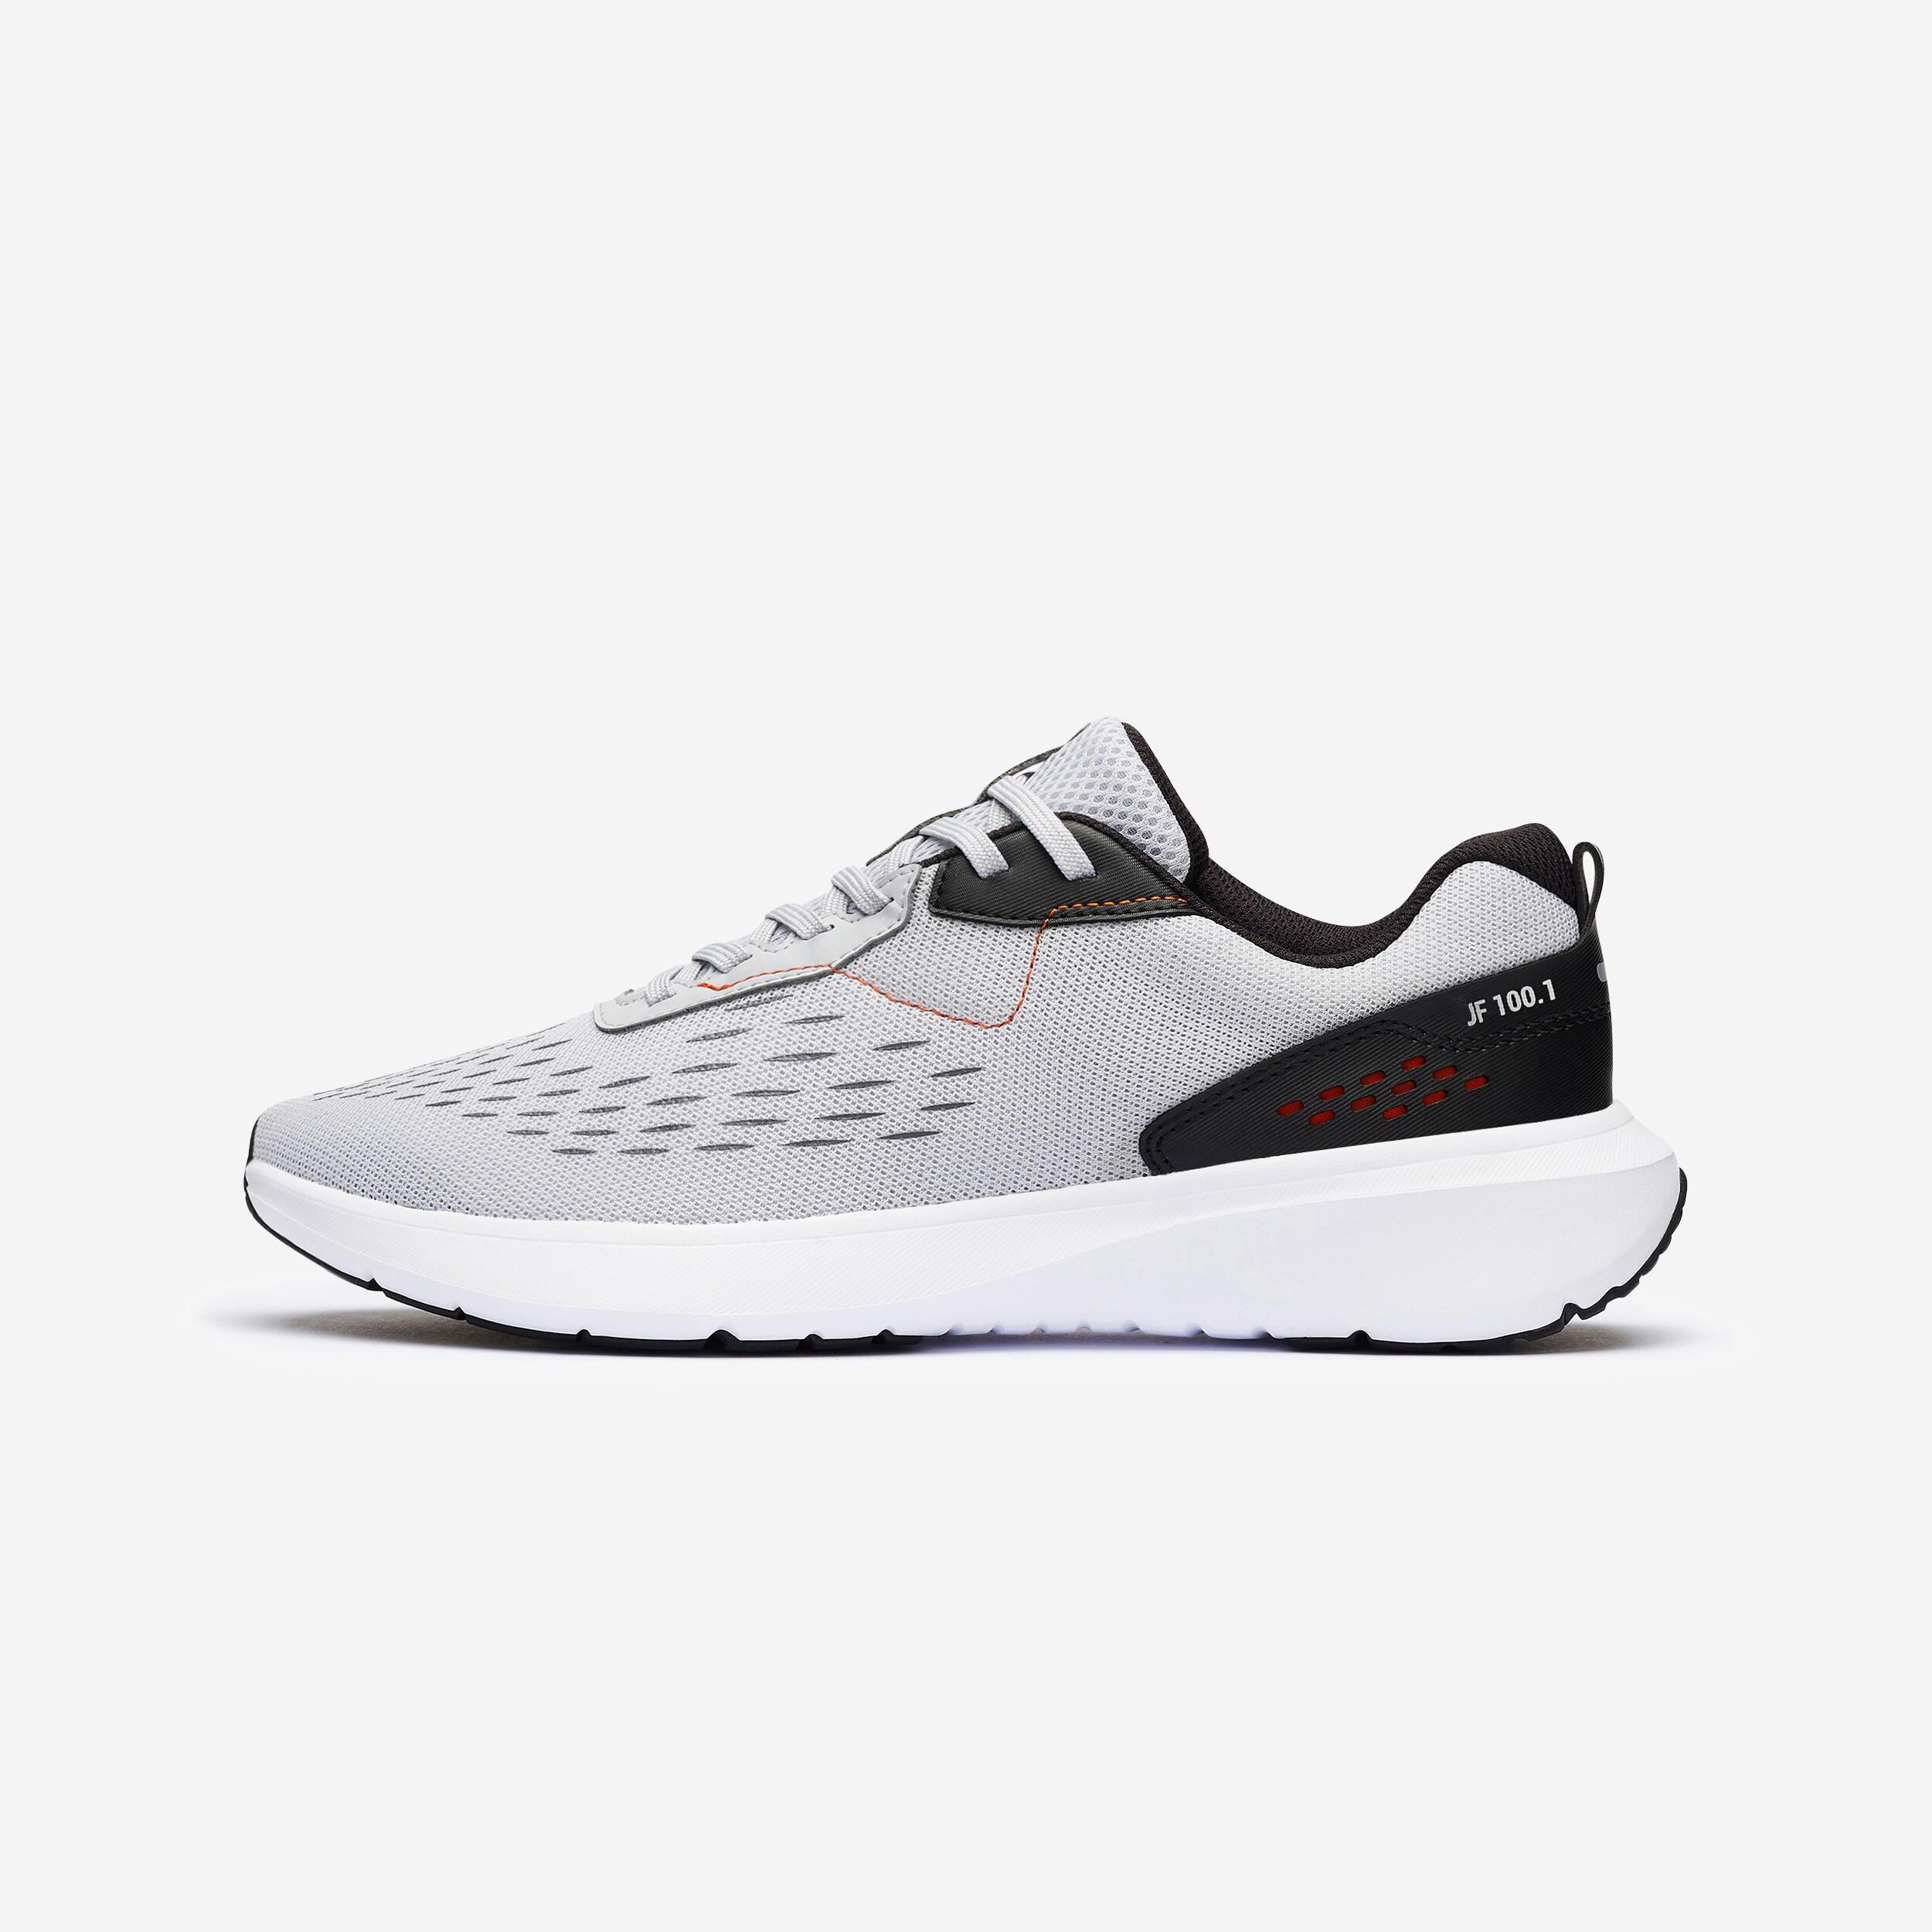 Men's Running Shoes - Jogflow 100.1 Grey/Orange - Pearl grey, Blood orange  - Kalenji - Decathlon